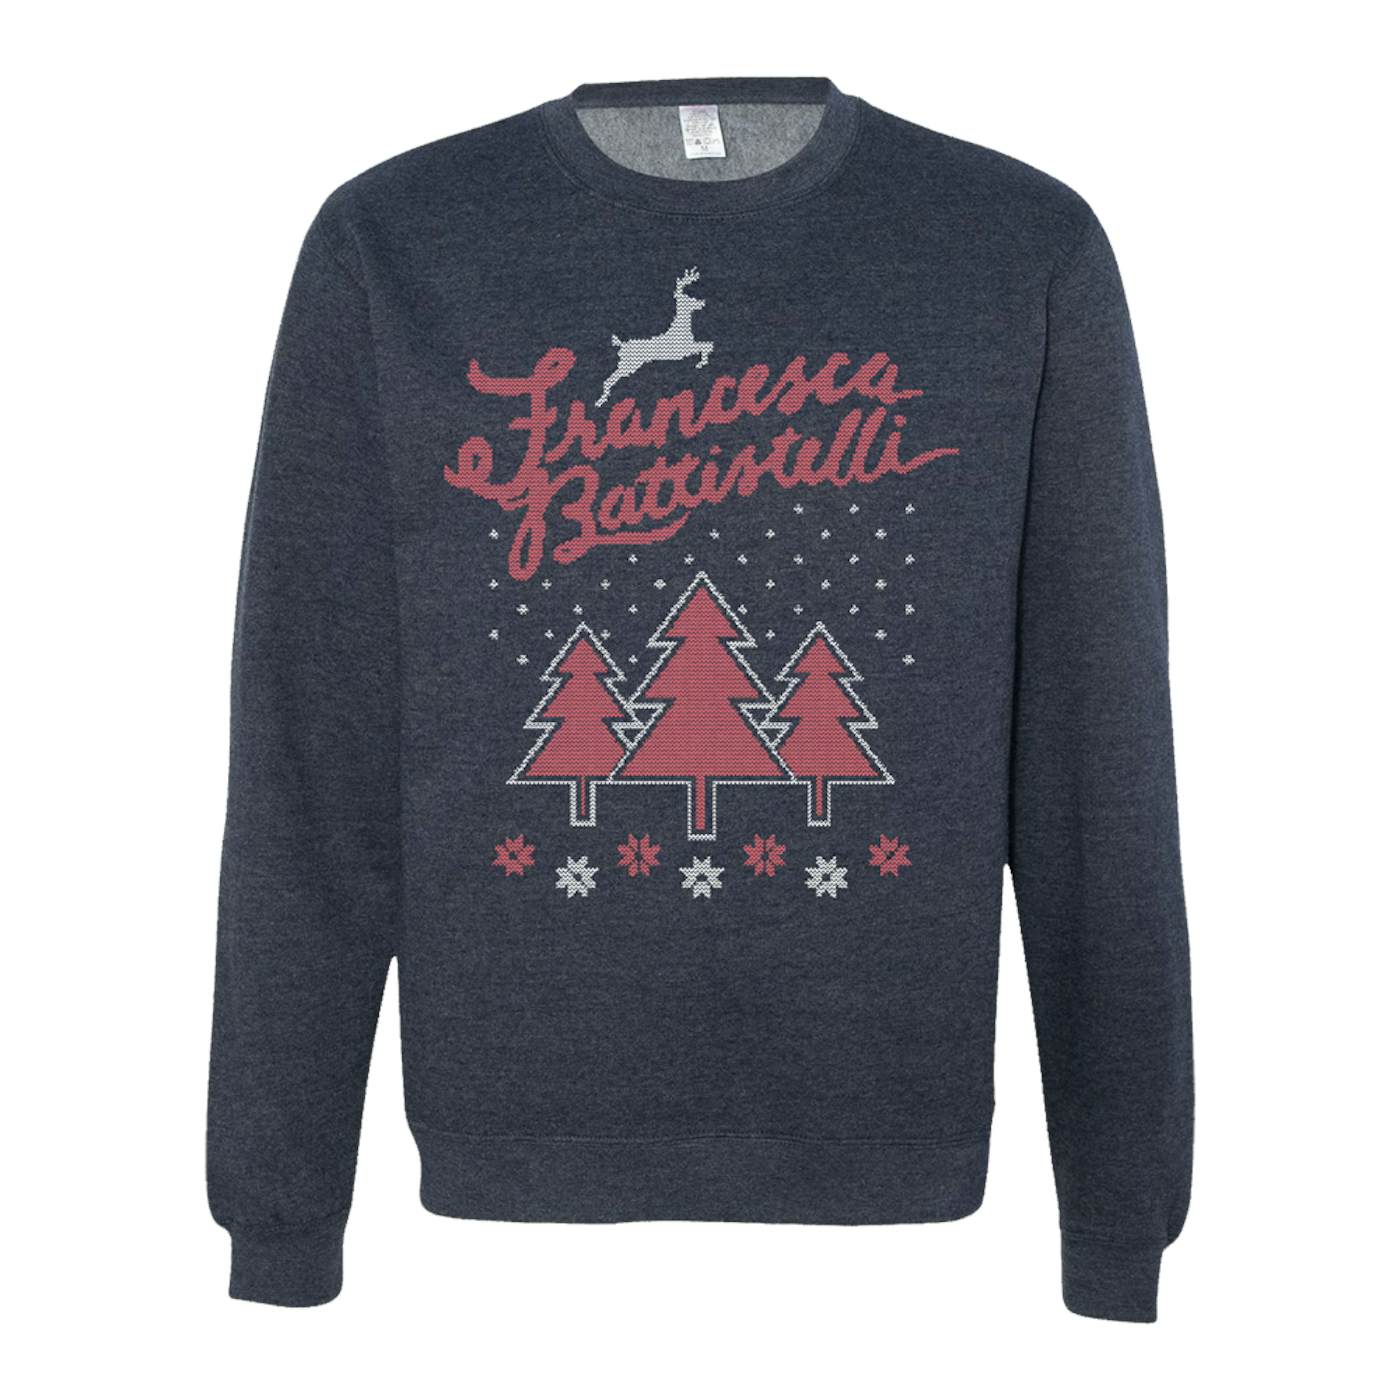 Francesca Battistelli This Christmas Sweatshirt